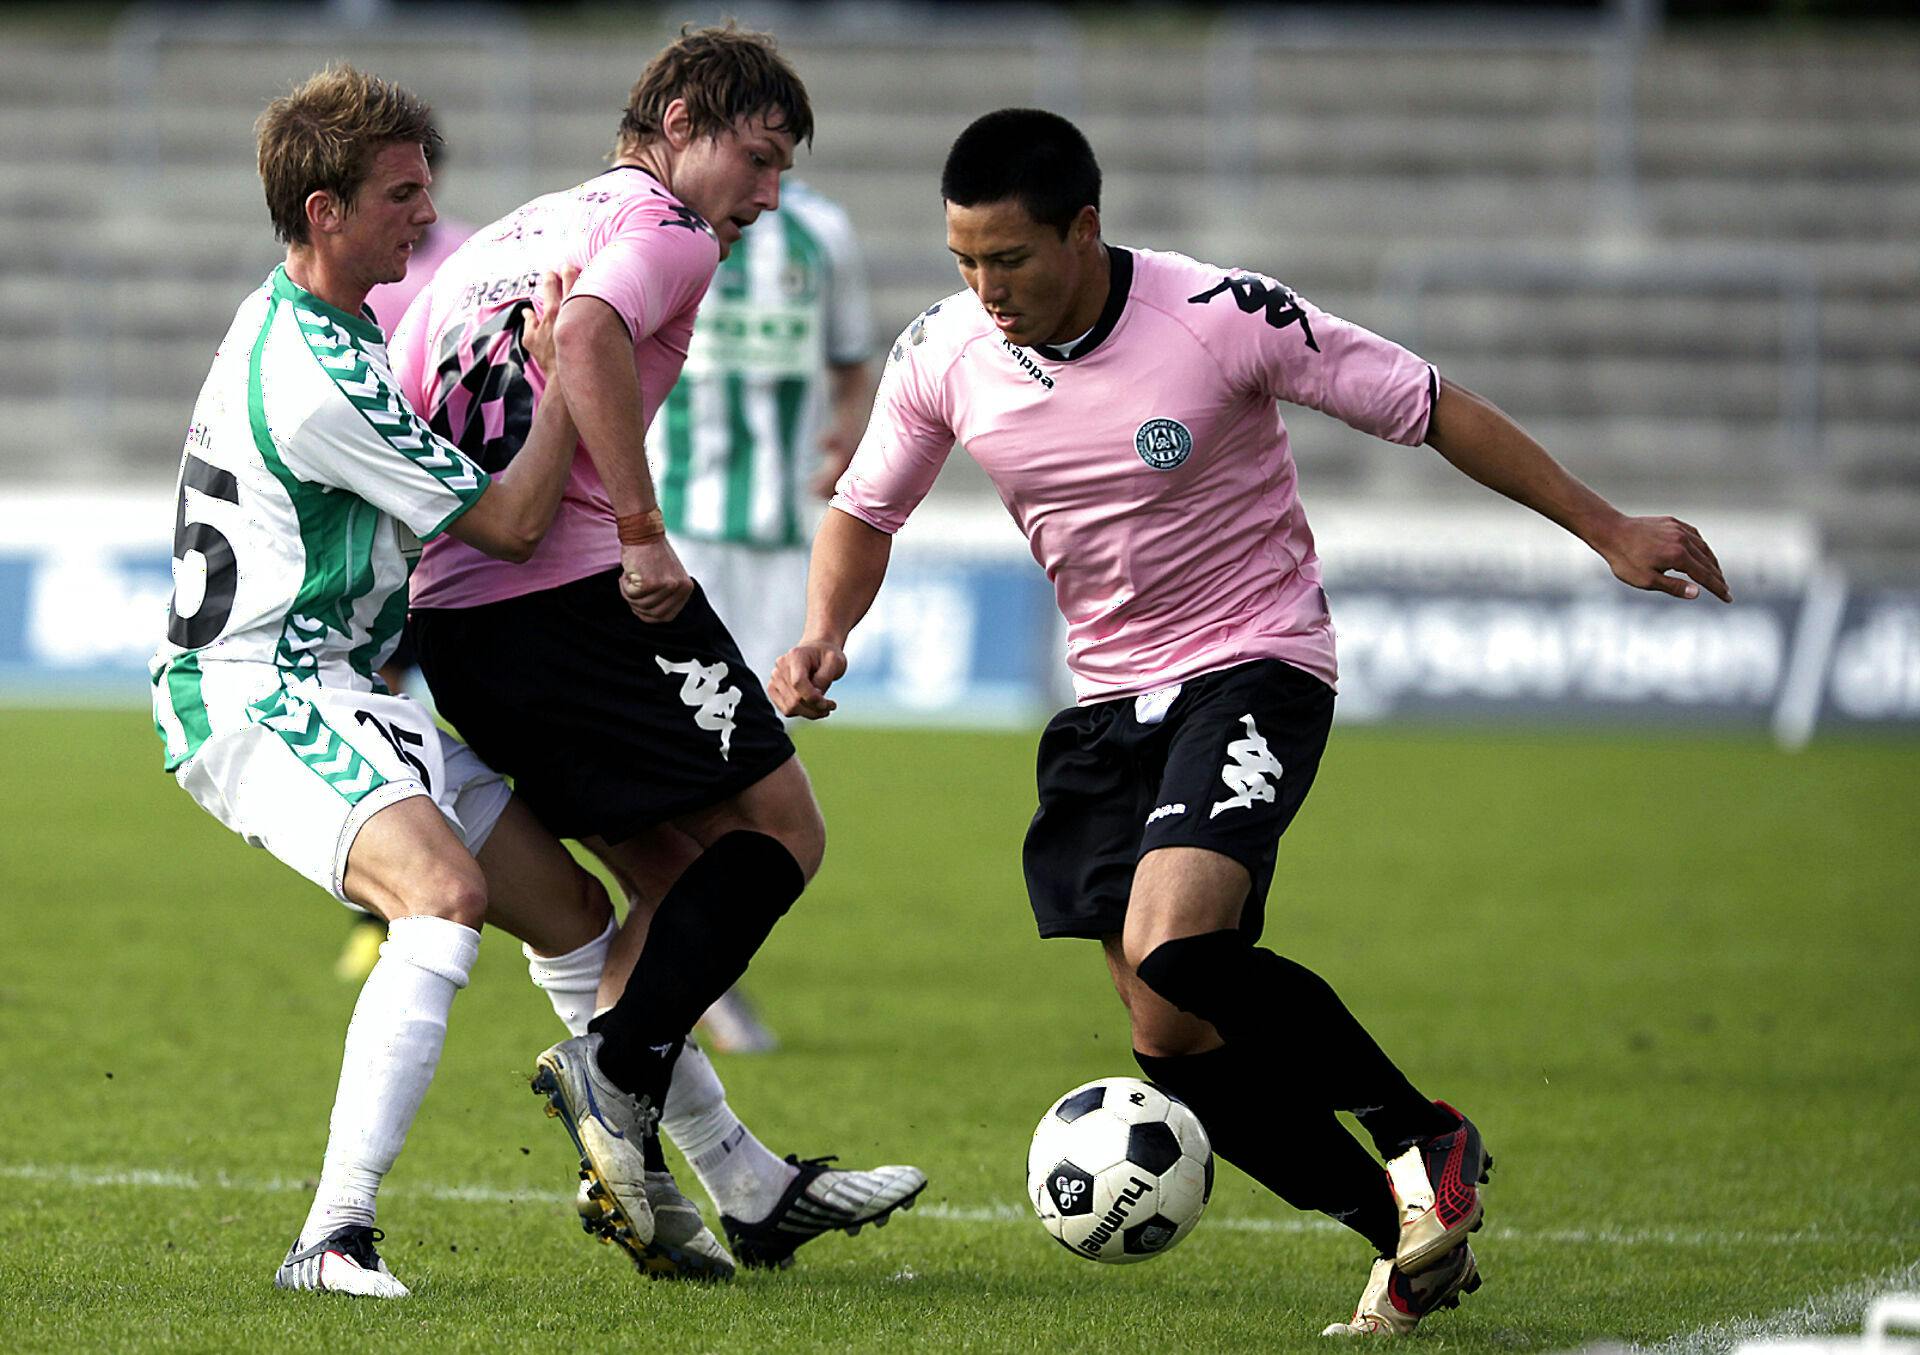 Carlos Shiralipour spillede i en periode i Viborg FF.&nbsp;
